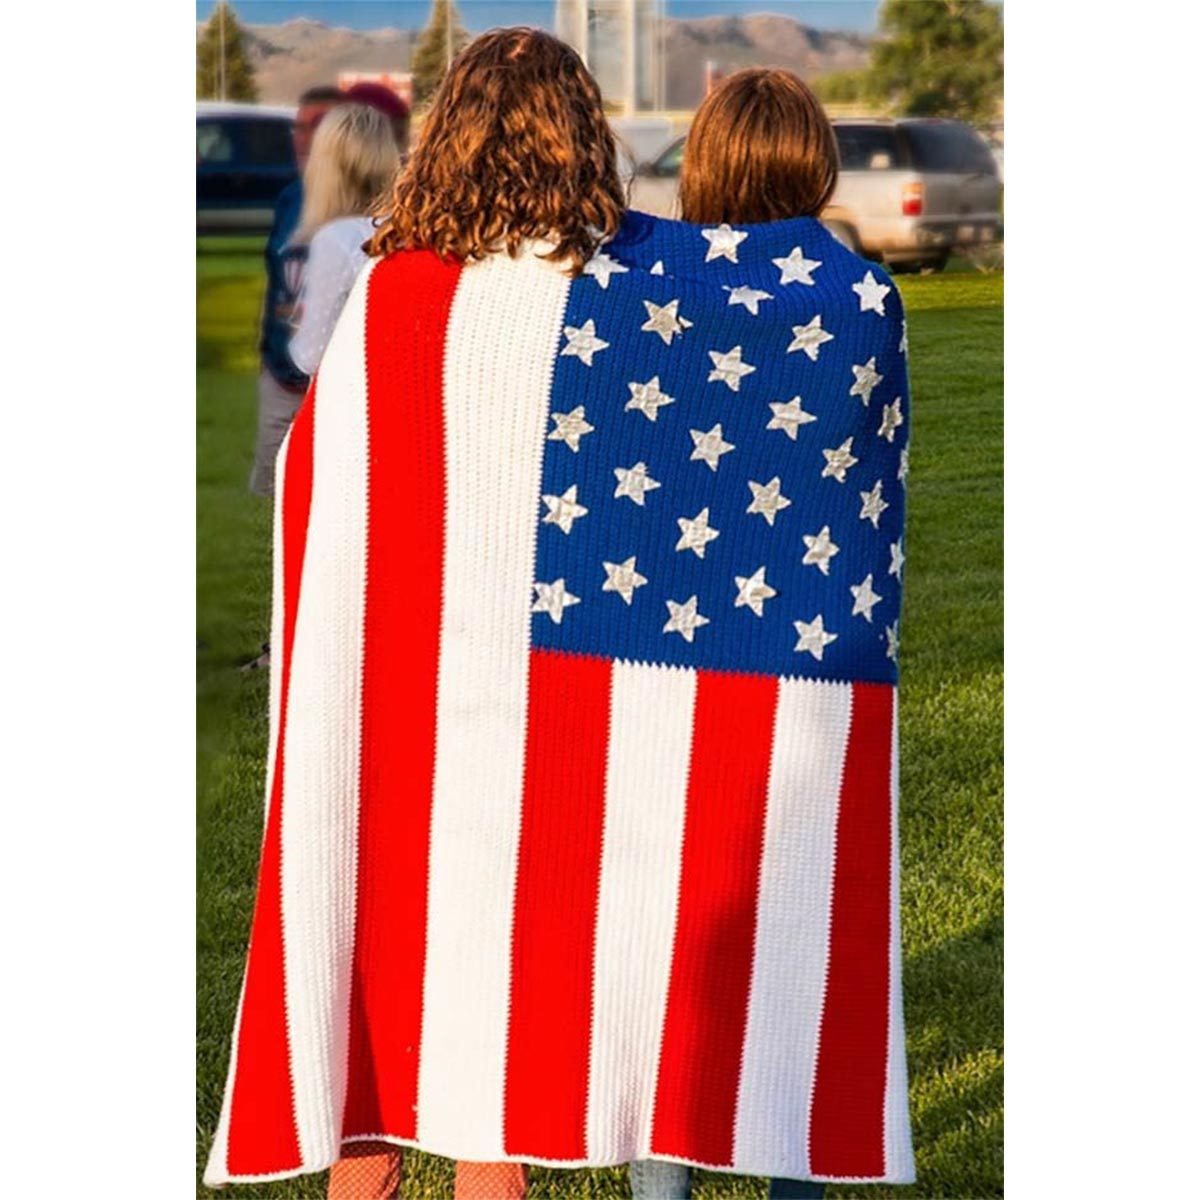 17 Glorious American Flag Photos Guaranteed To Make You Feel Patriotic Courtesy Mark Greenberg 0a